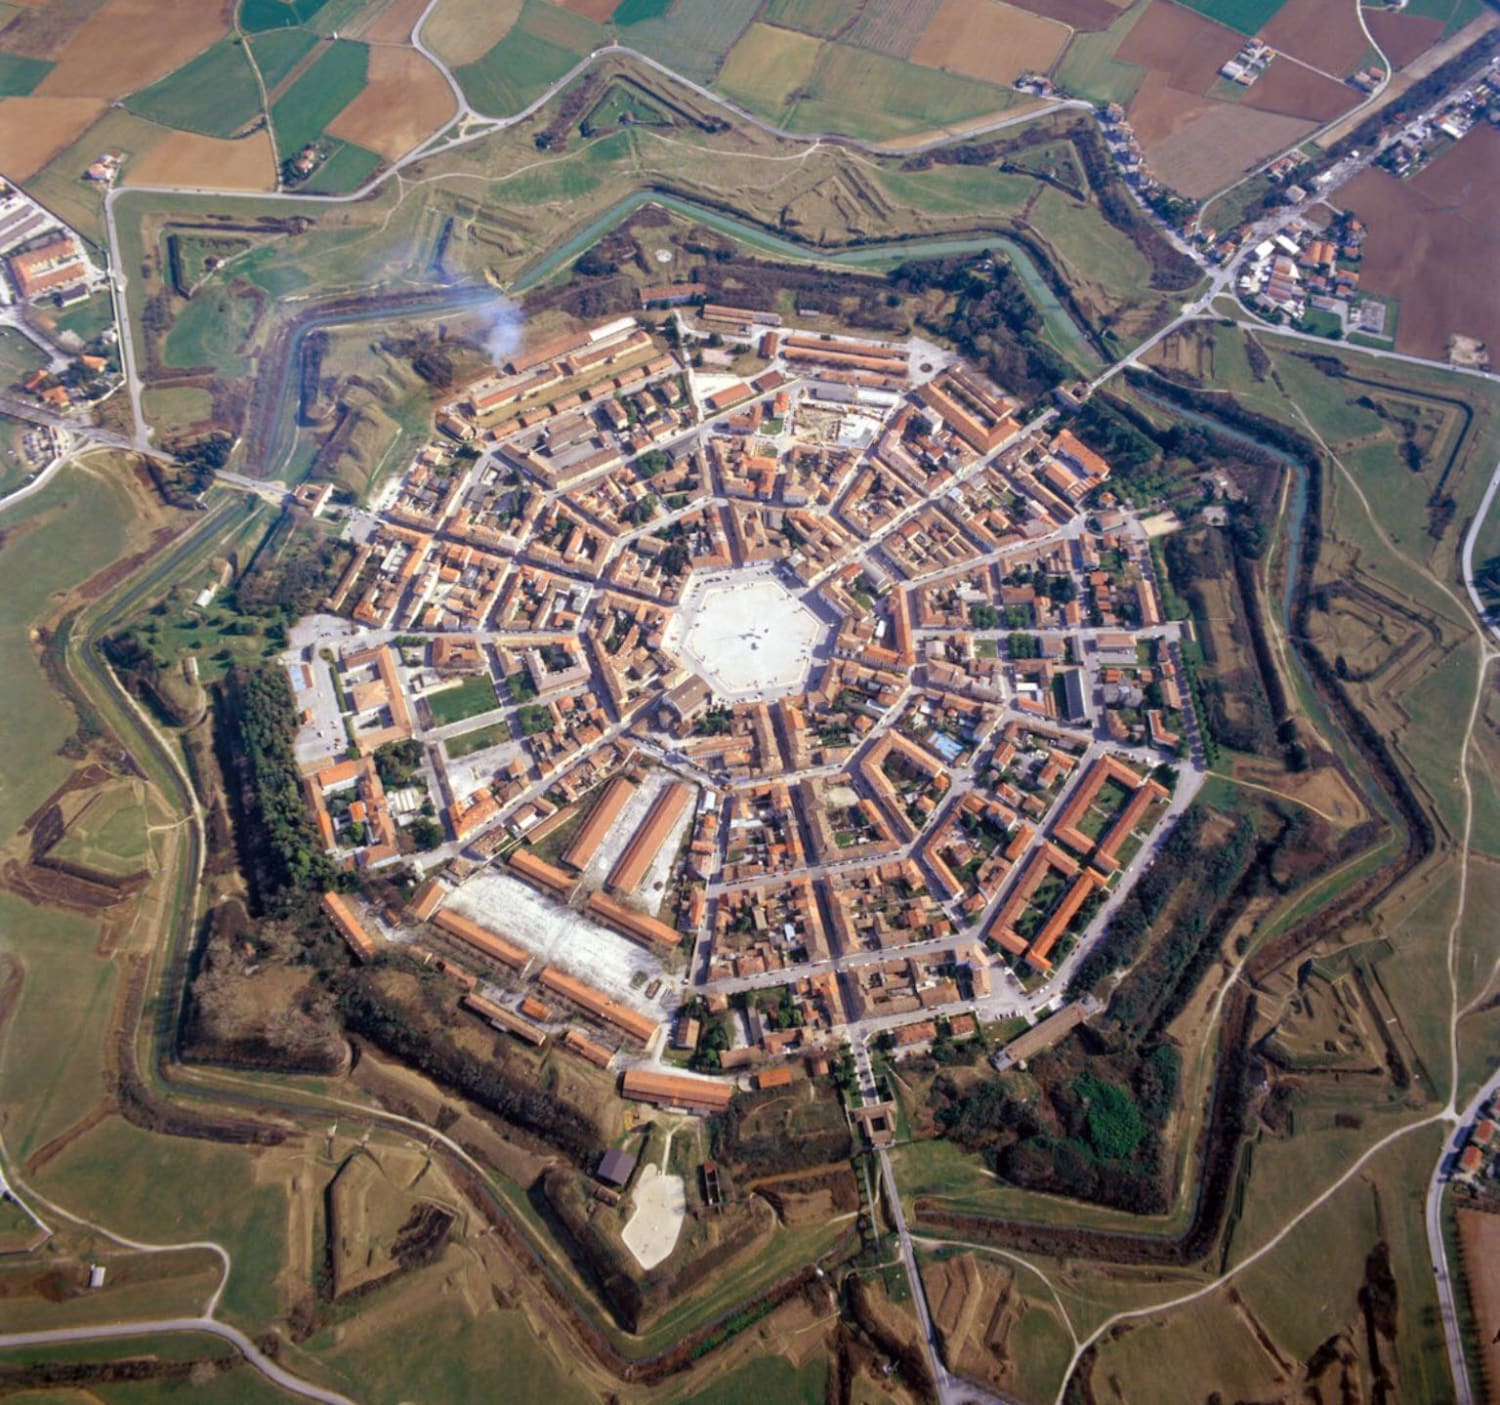 Fortress City of Palmanova, Italy, built with a polygonal diagram